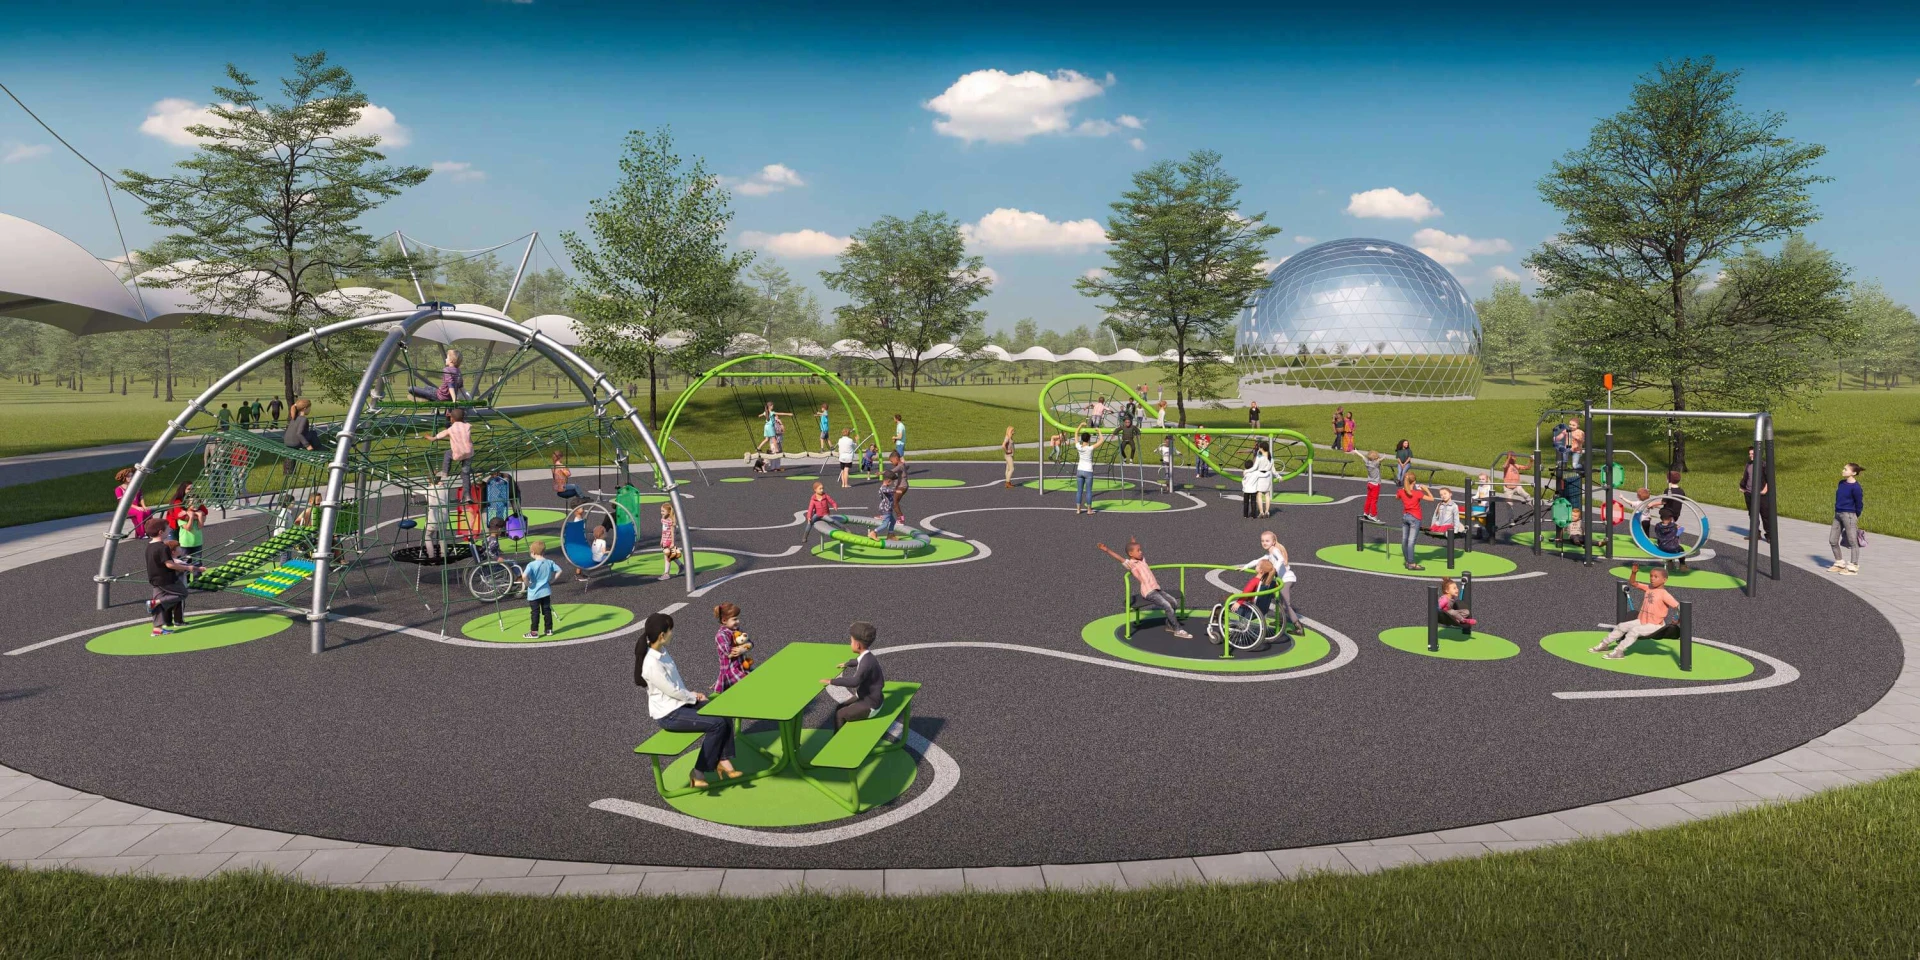 A unique Urban Arch playground design that attracts children and their parents